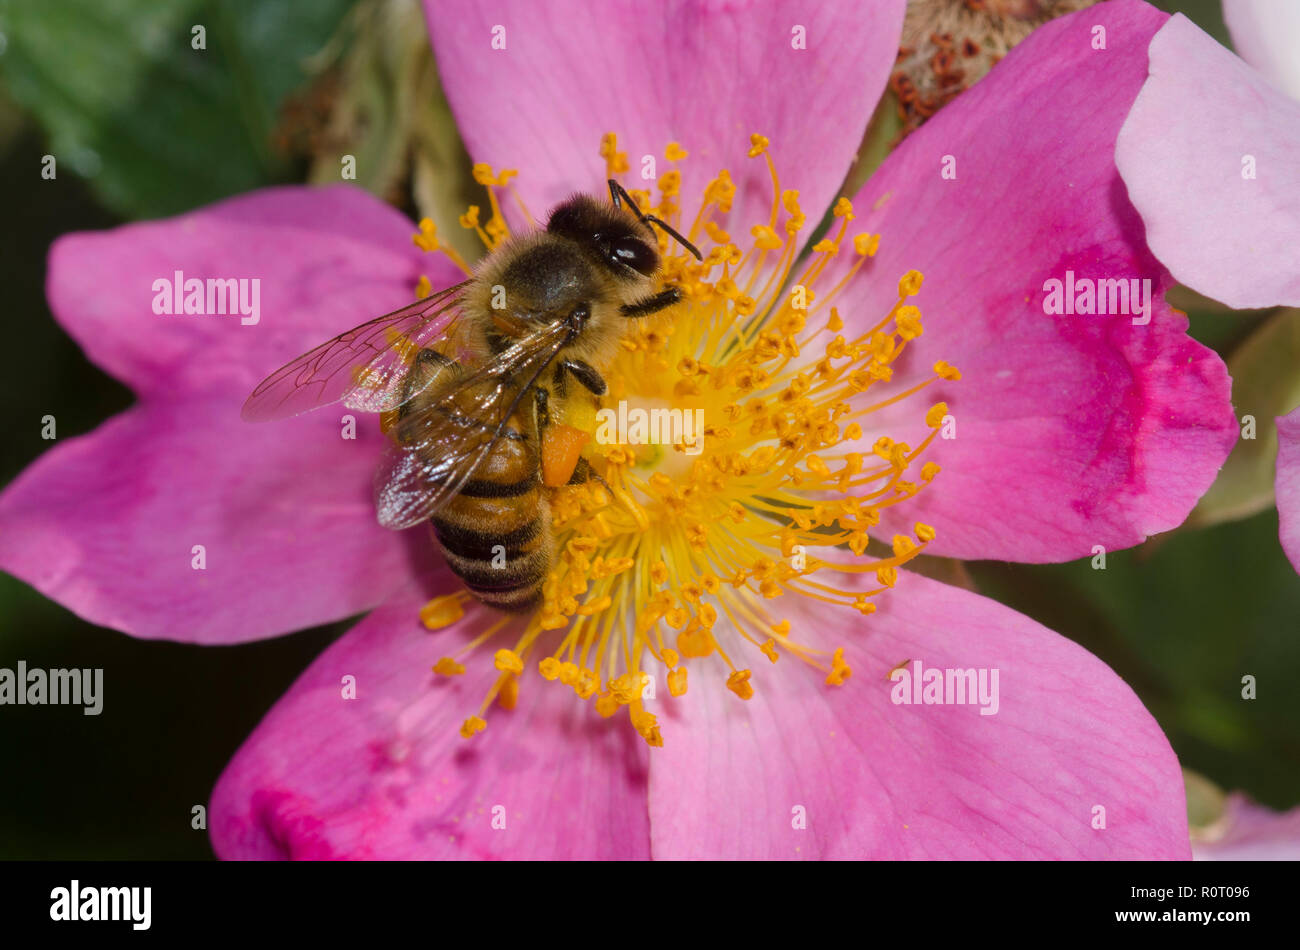 Honey Bee, Apis mellifera, on wild rose, Rosa sp. Stock Photo